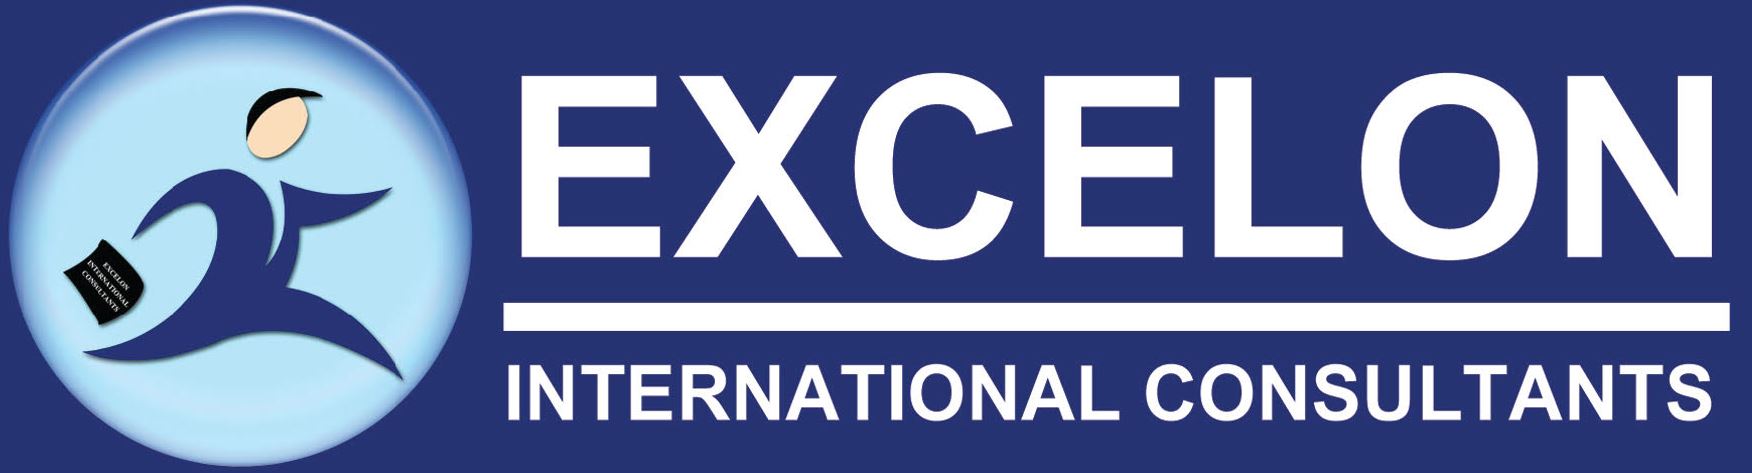 Excelon International Consultants Logo